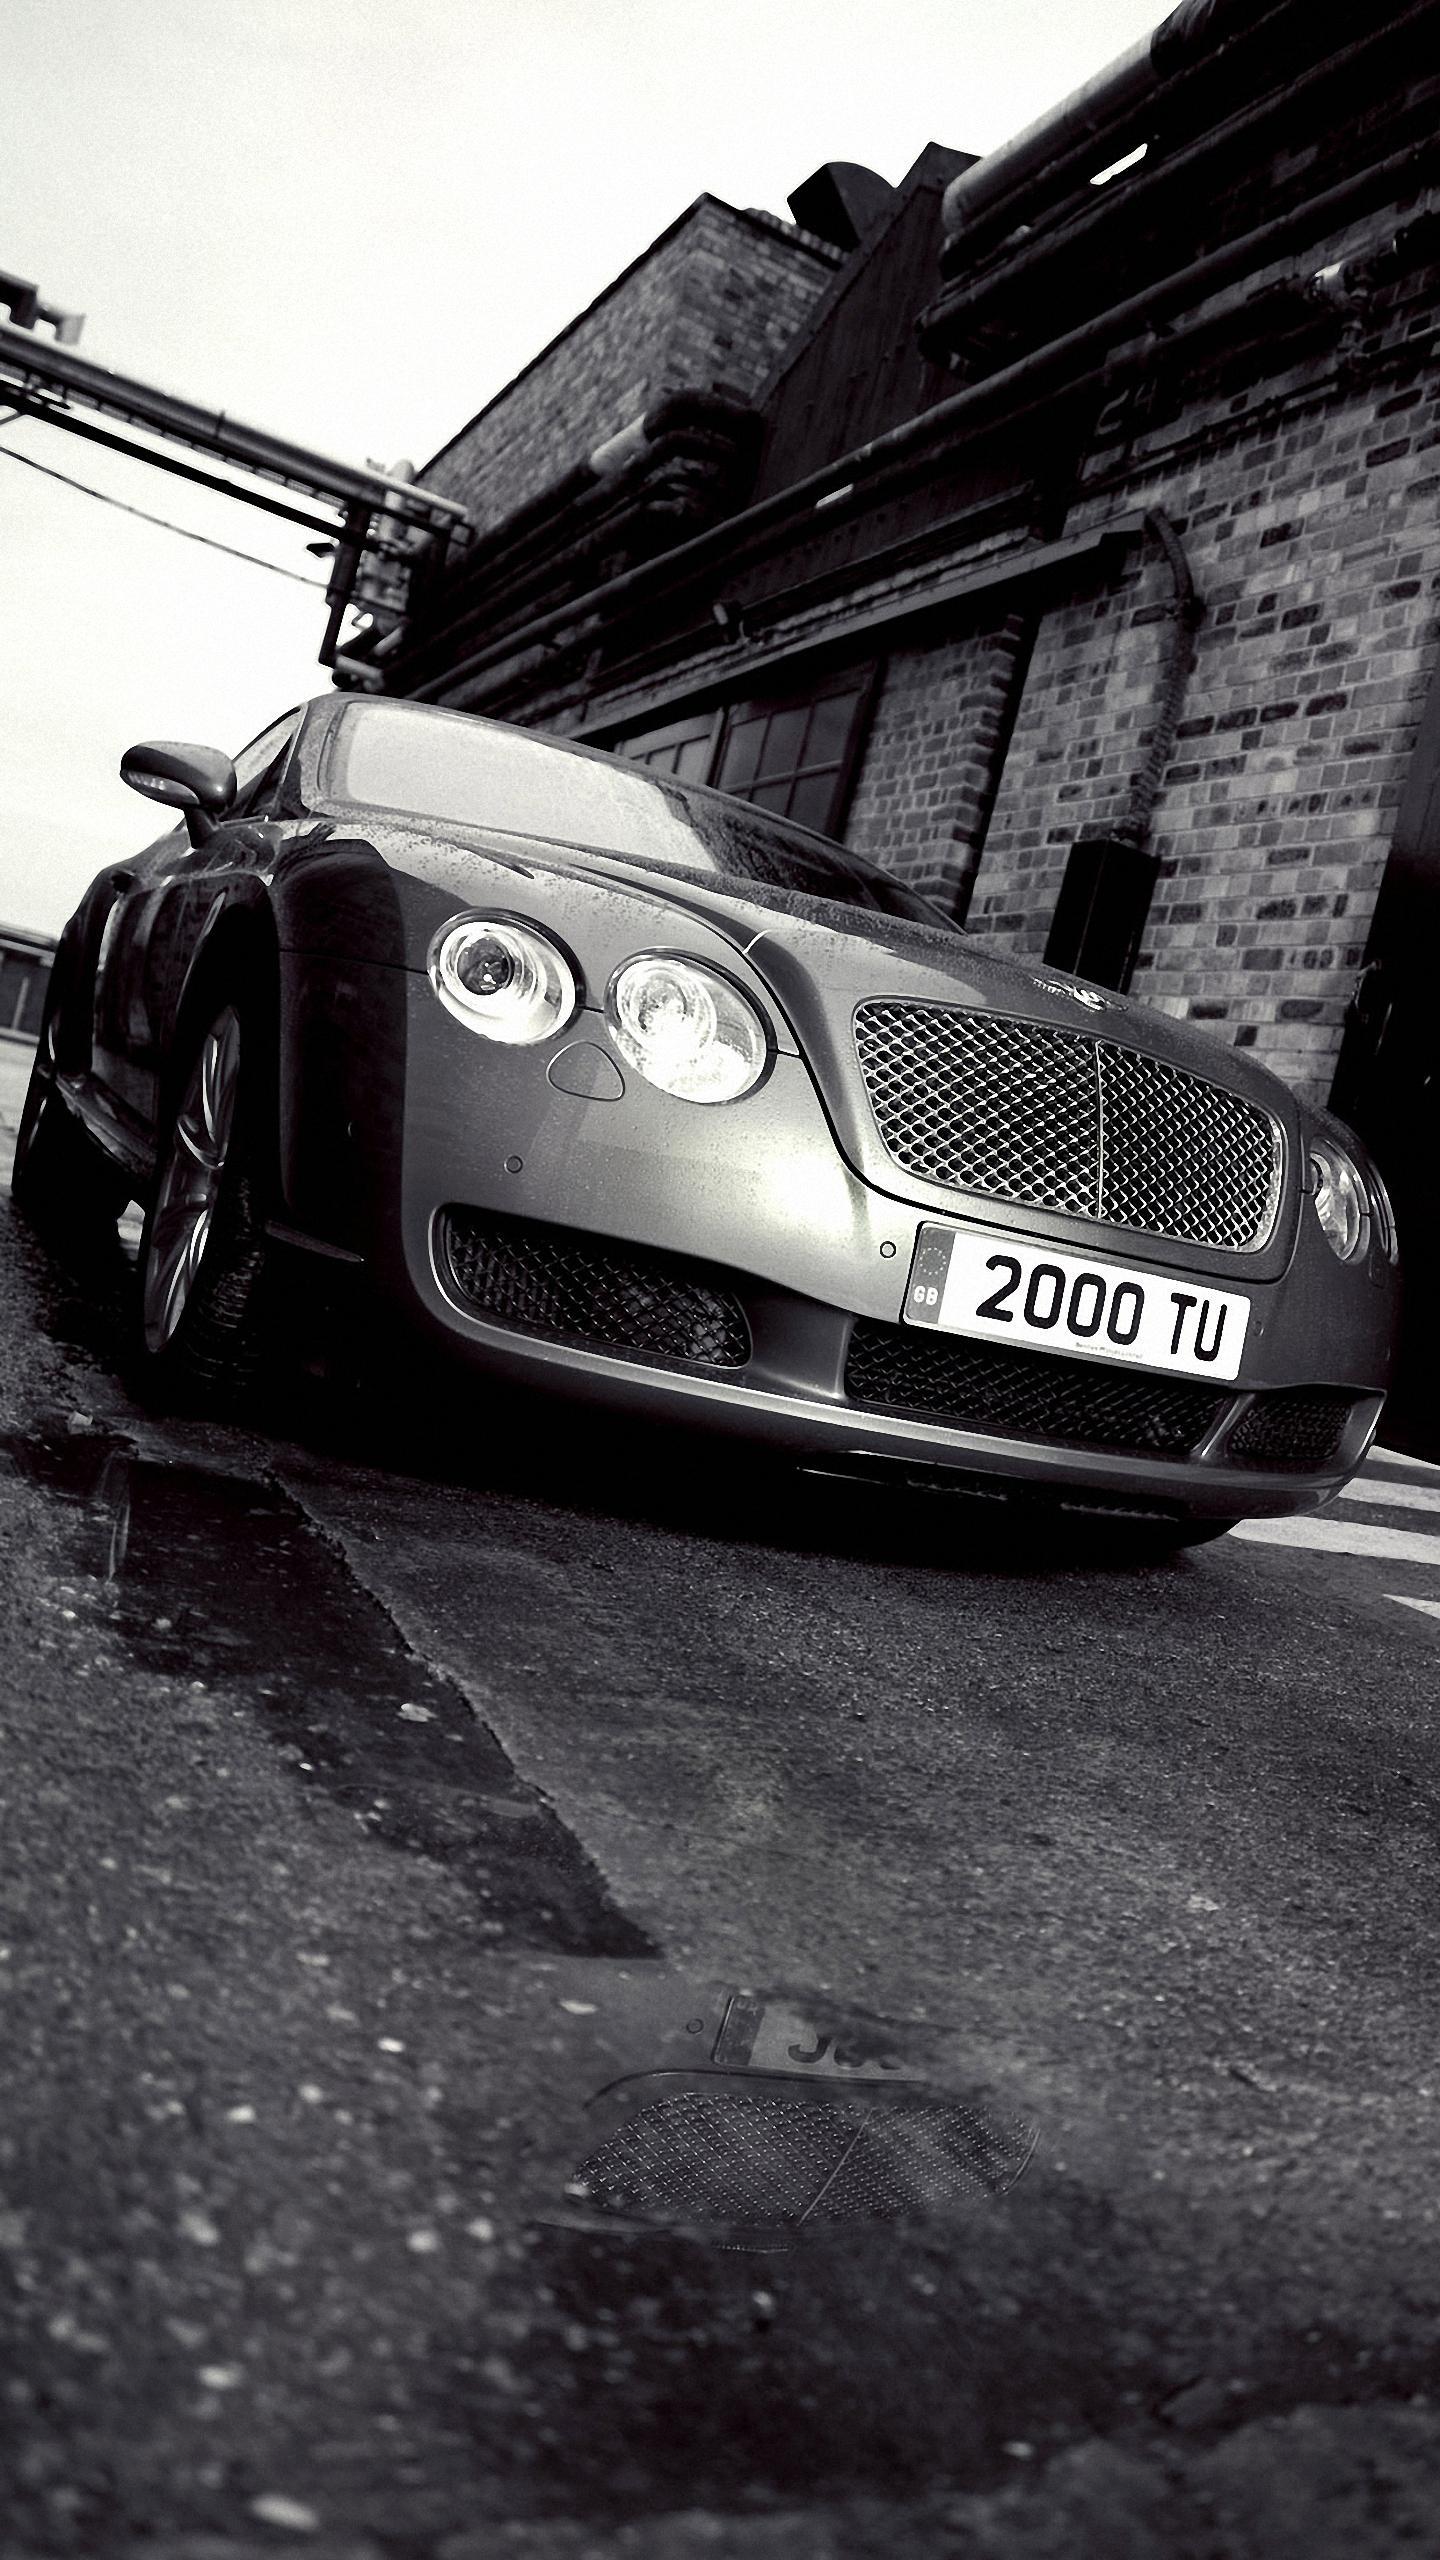 Black Bentley Car iPhone 6 Wallpaper HD 720 X 1280